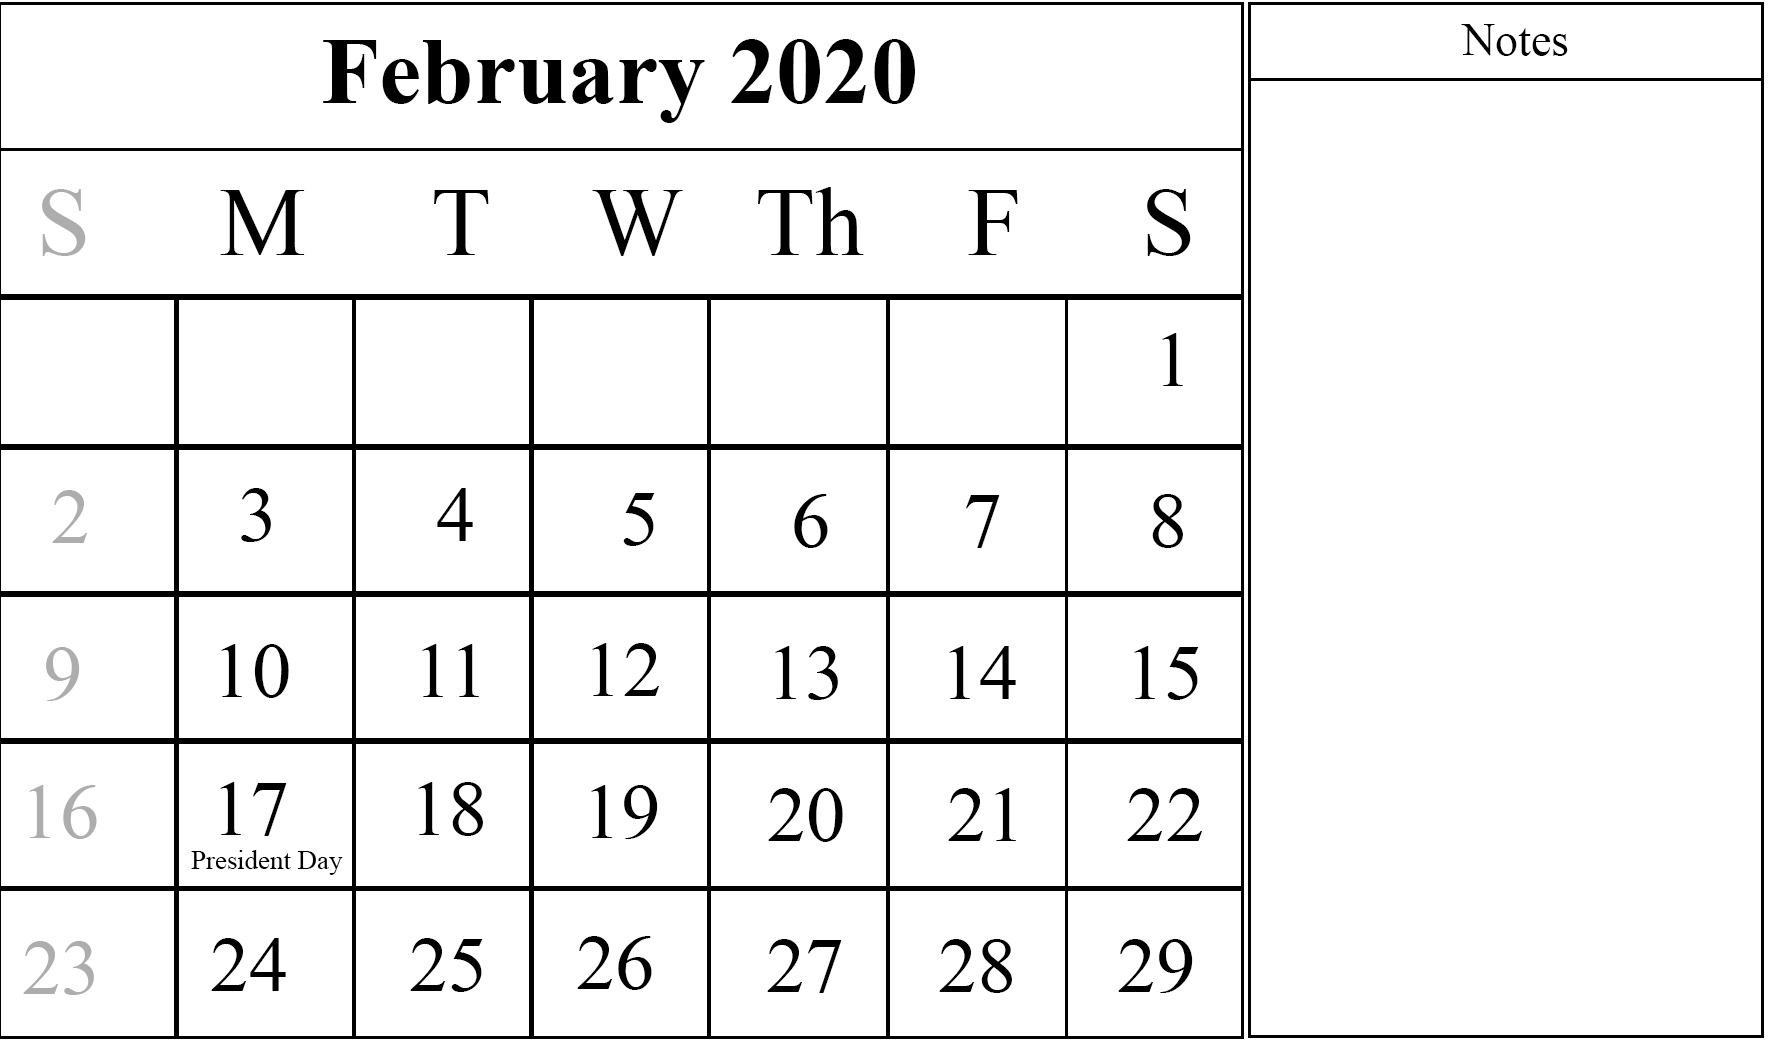 February 2020 Calendar Wallpapers - Top Free February 2020 Feb 2 2020 Calendar